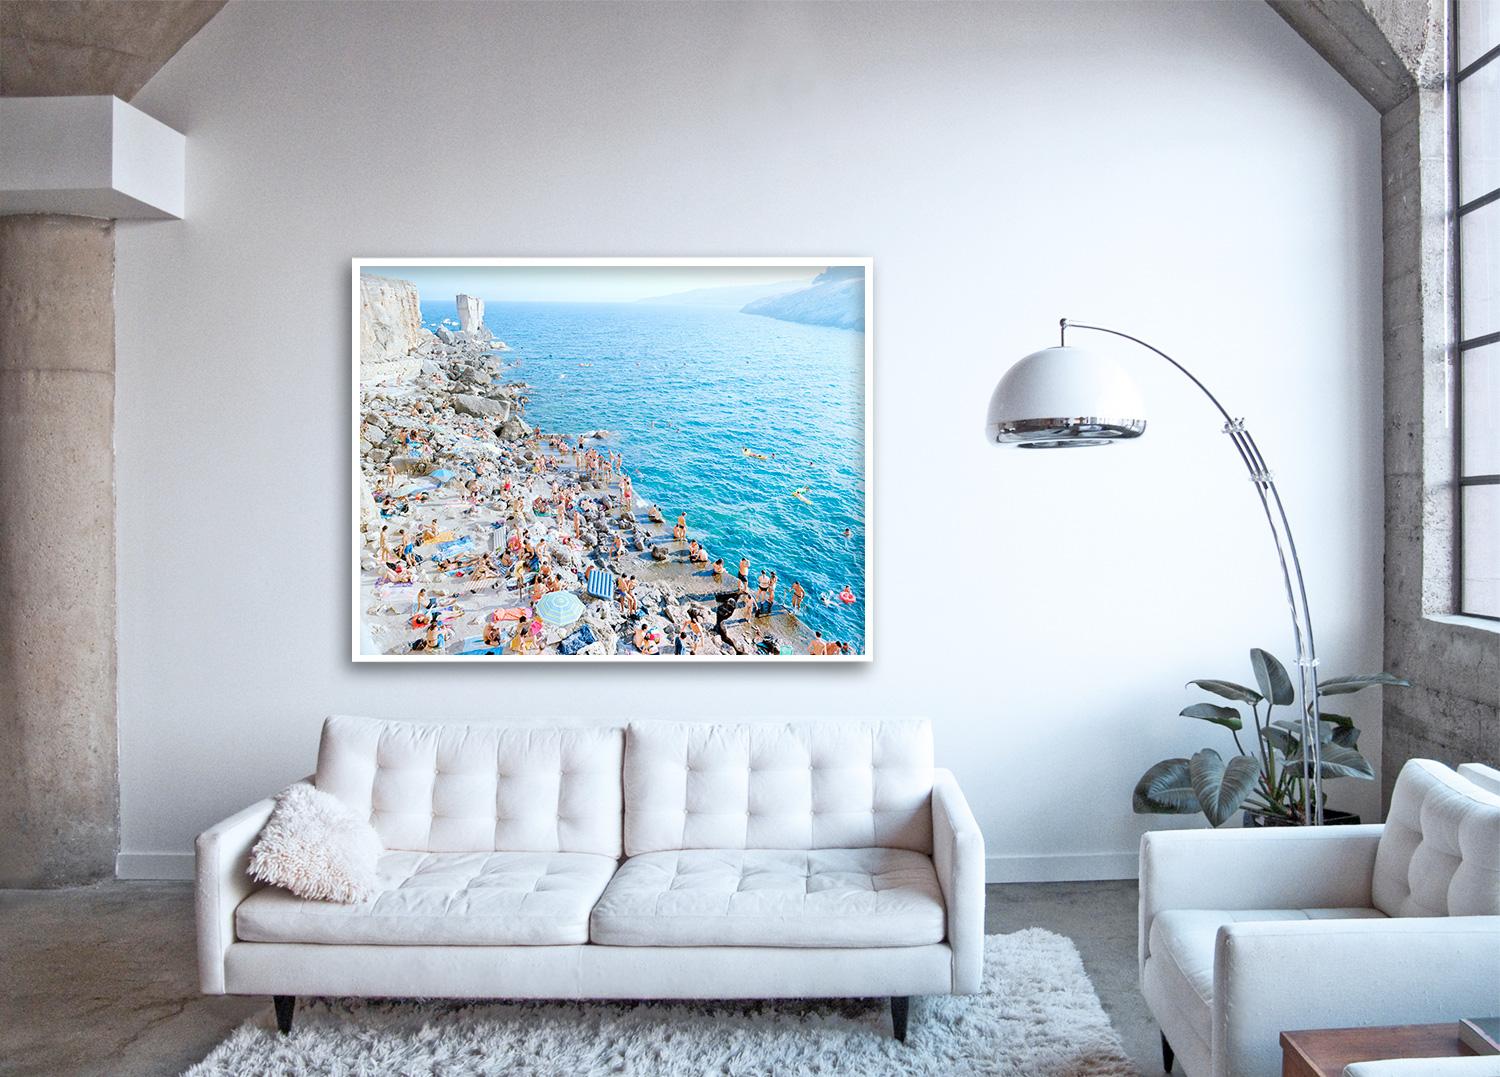 Porto Miggiano (framed) - large scale photograph of Italian Mediterranean beach  - Photograph by Massimo Vitali